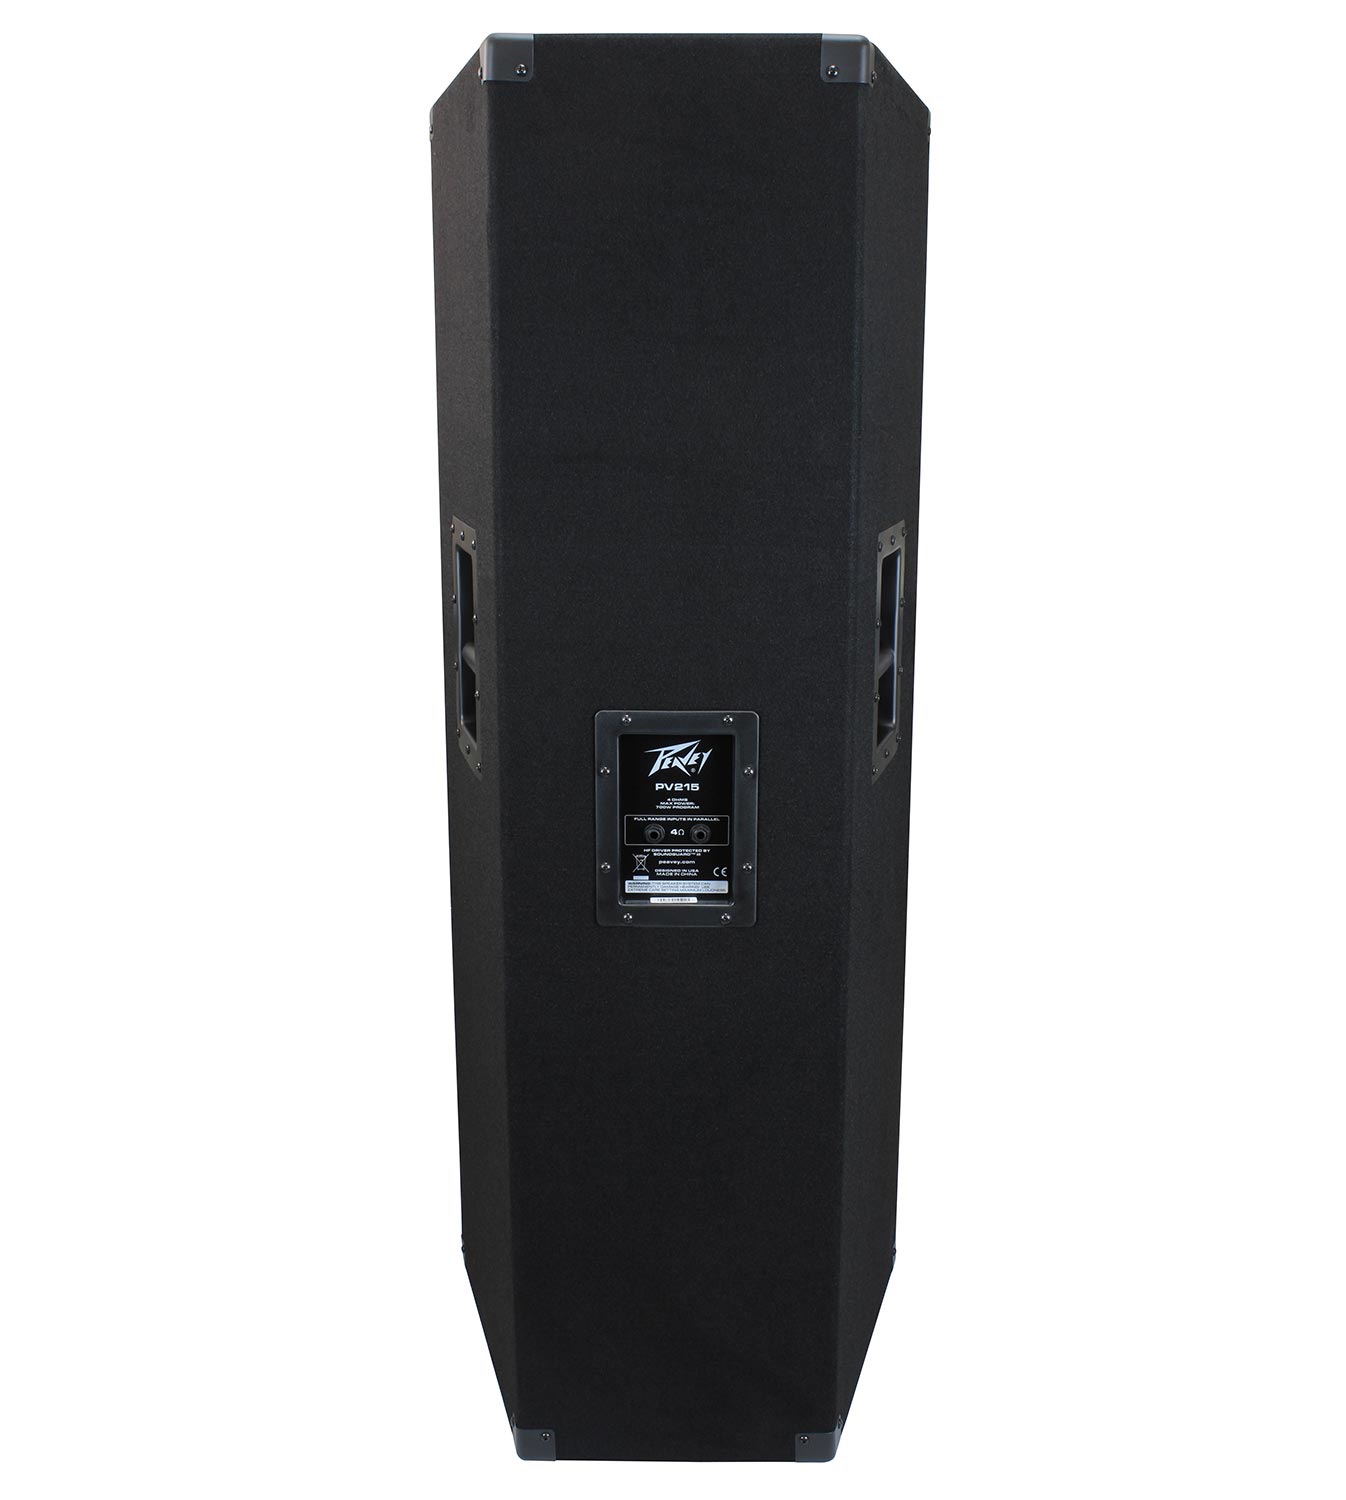 PV 215 Dual 15" 2-Way Speaker Cabinet